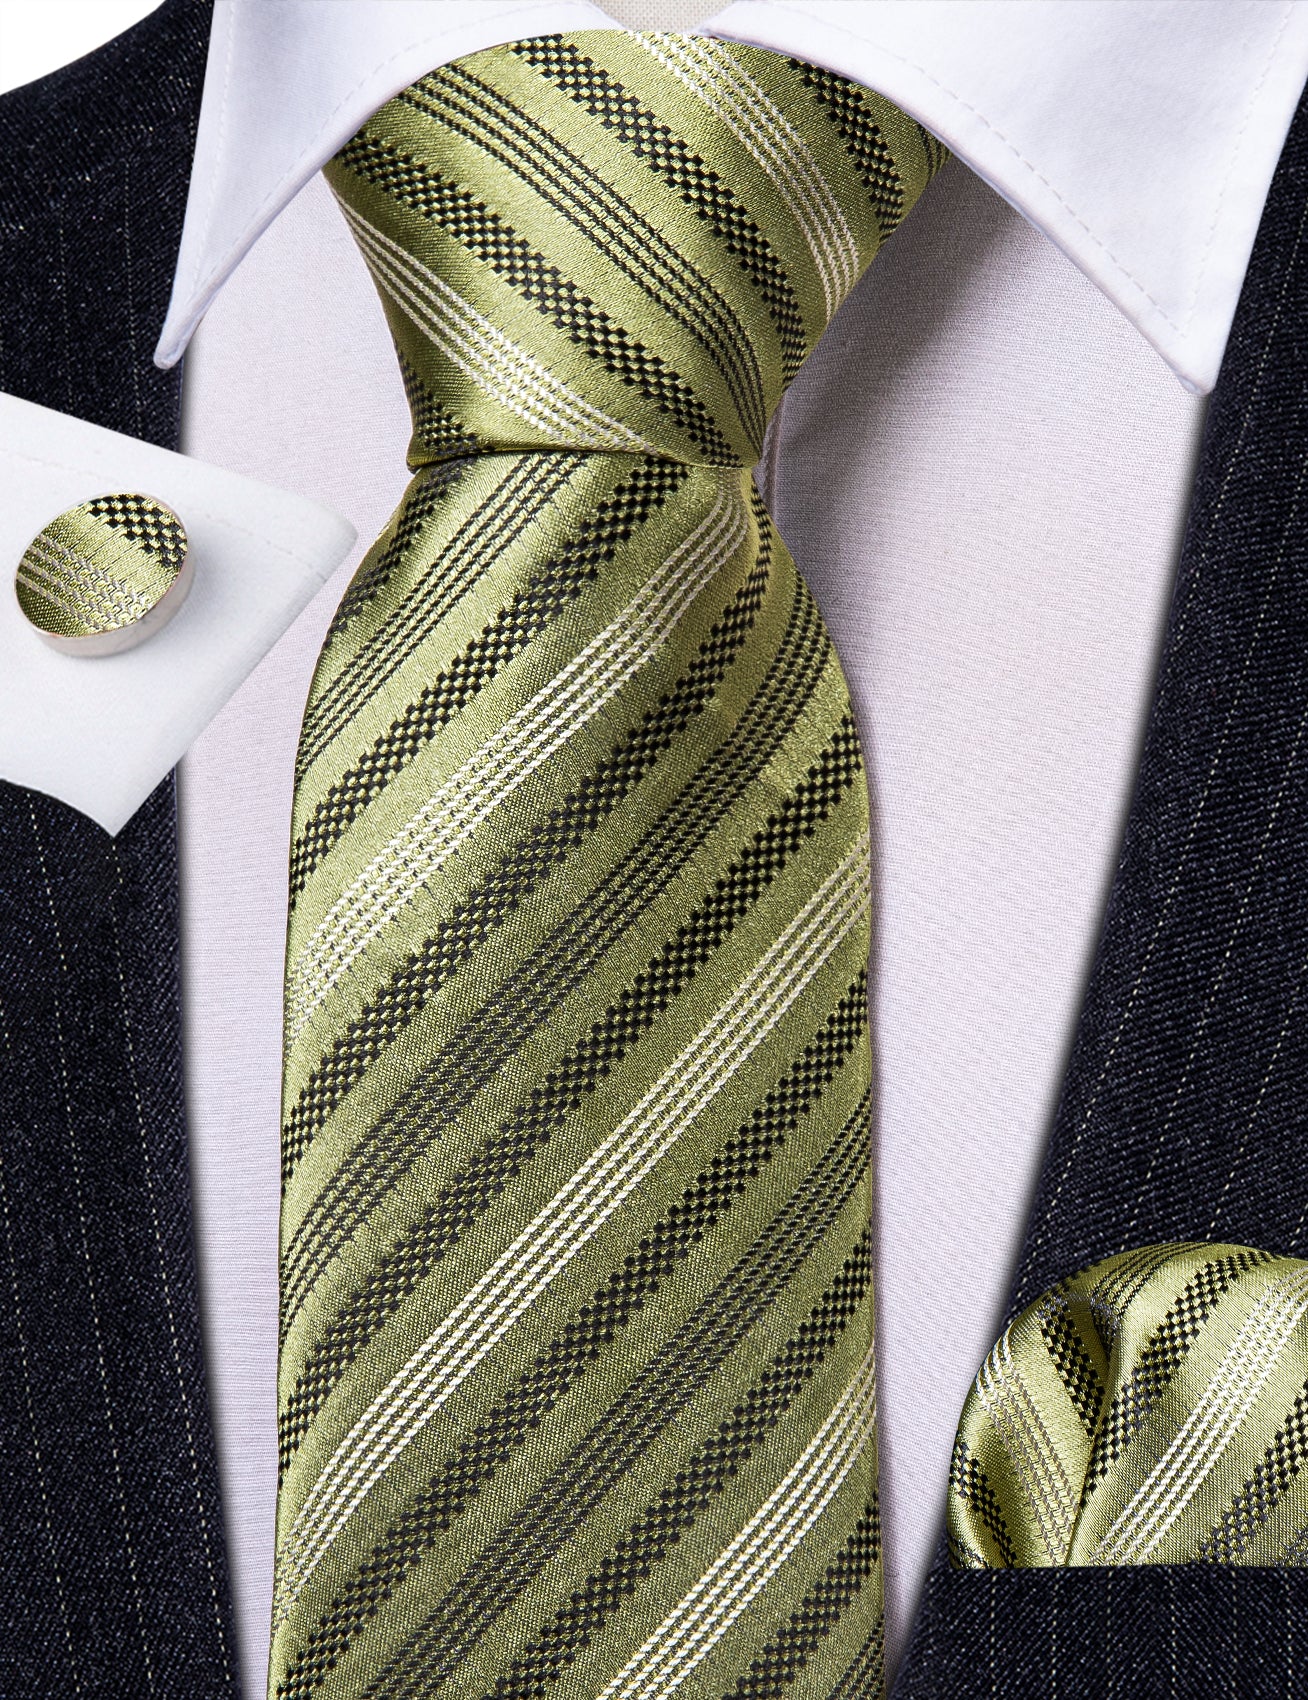 Barry.Wang Olive Tie Black Striped Silk Tie Pocket Square Cufflinks Set